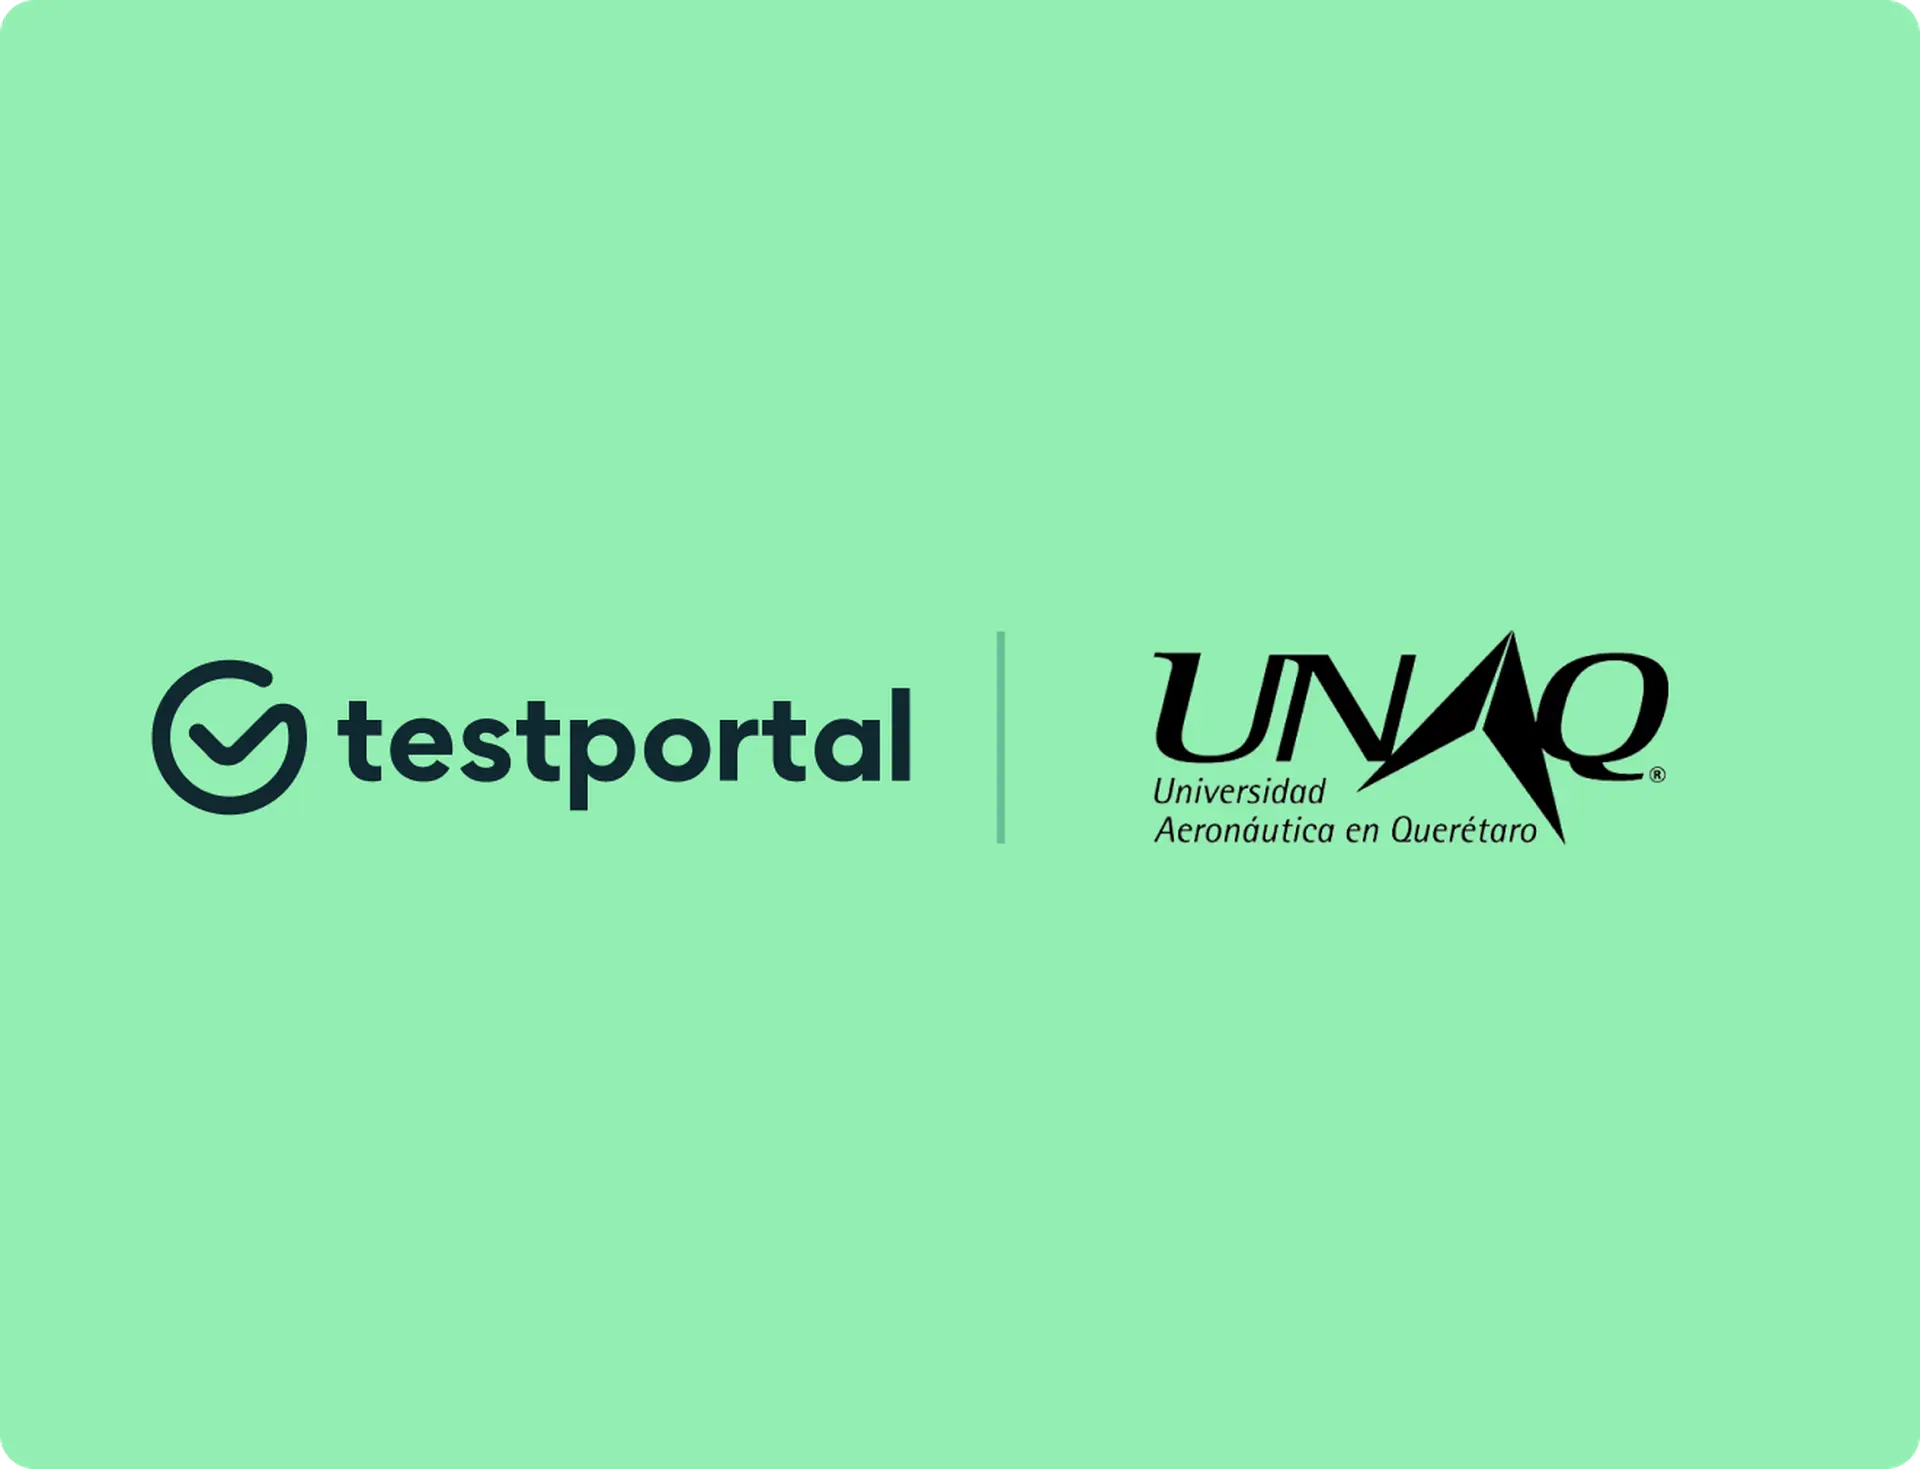 Testportal and UNAQ logos